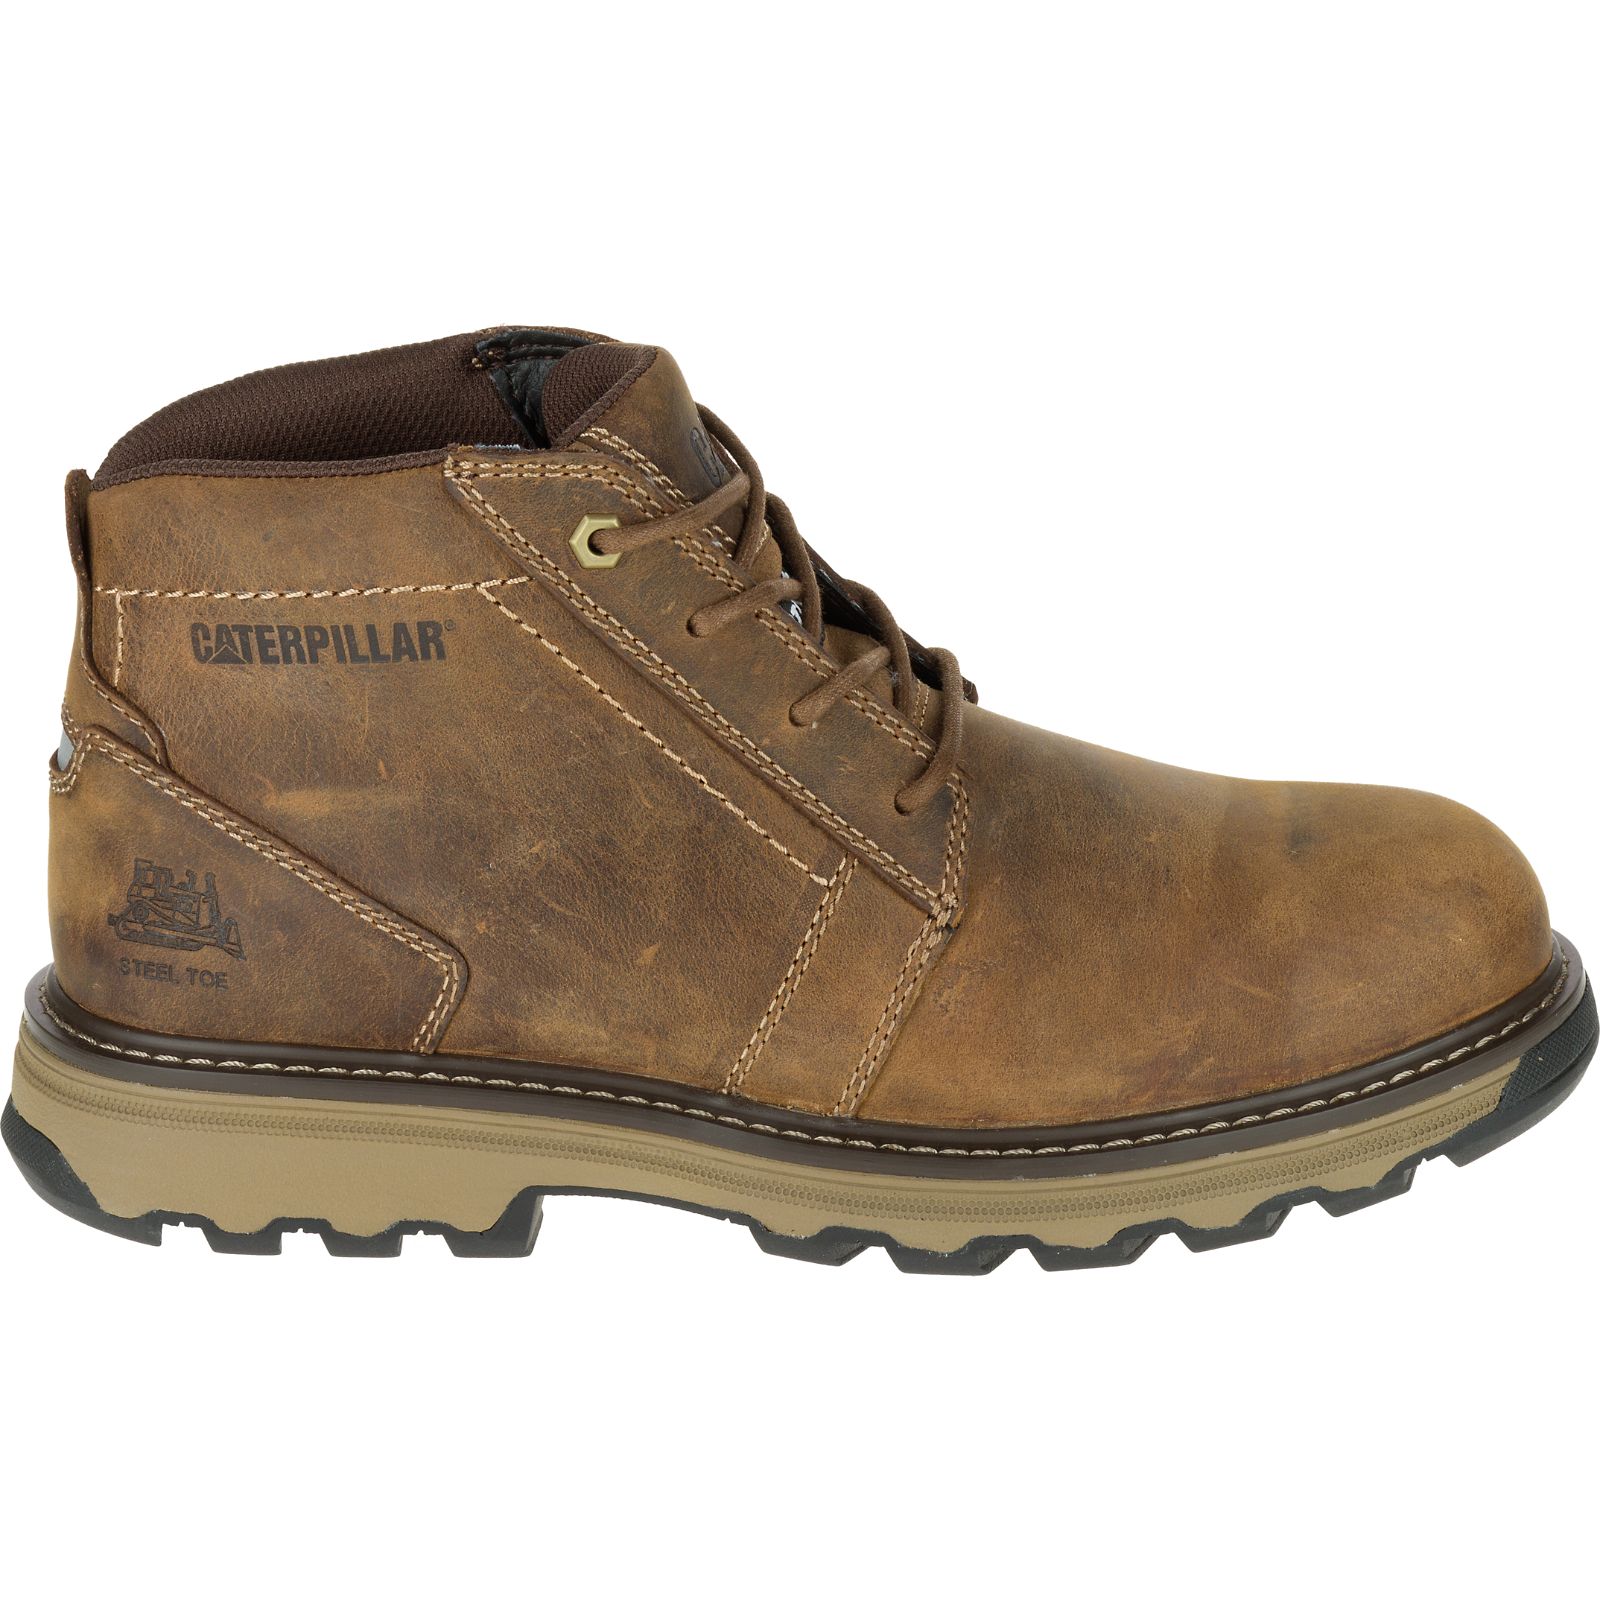 Caterpillar Parker Steel Toe S1p Hrc Sra - Mens Work Boots - Dark Beige - NZ (065HEIJPZ)